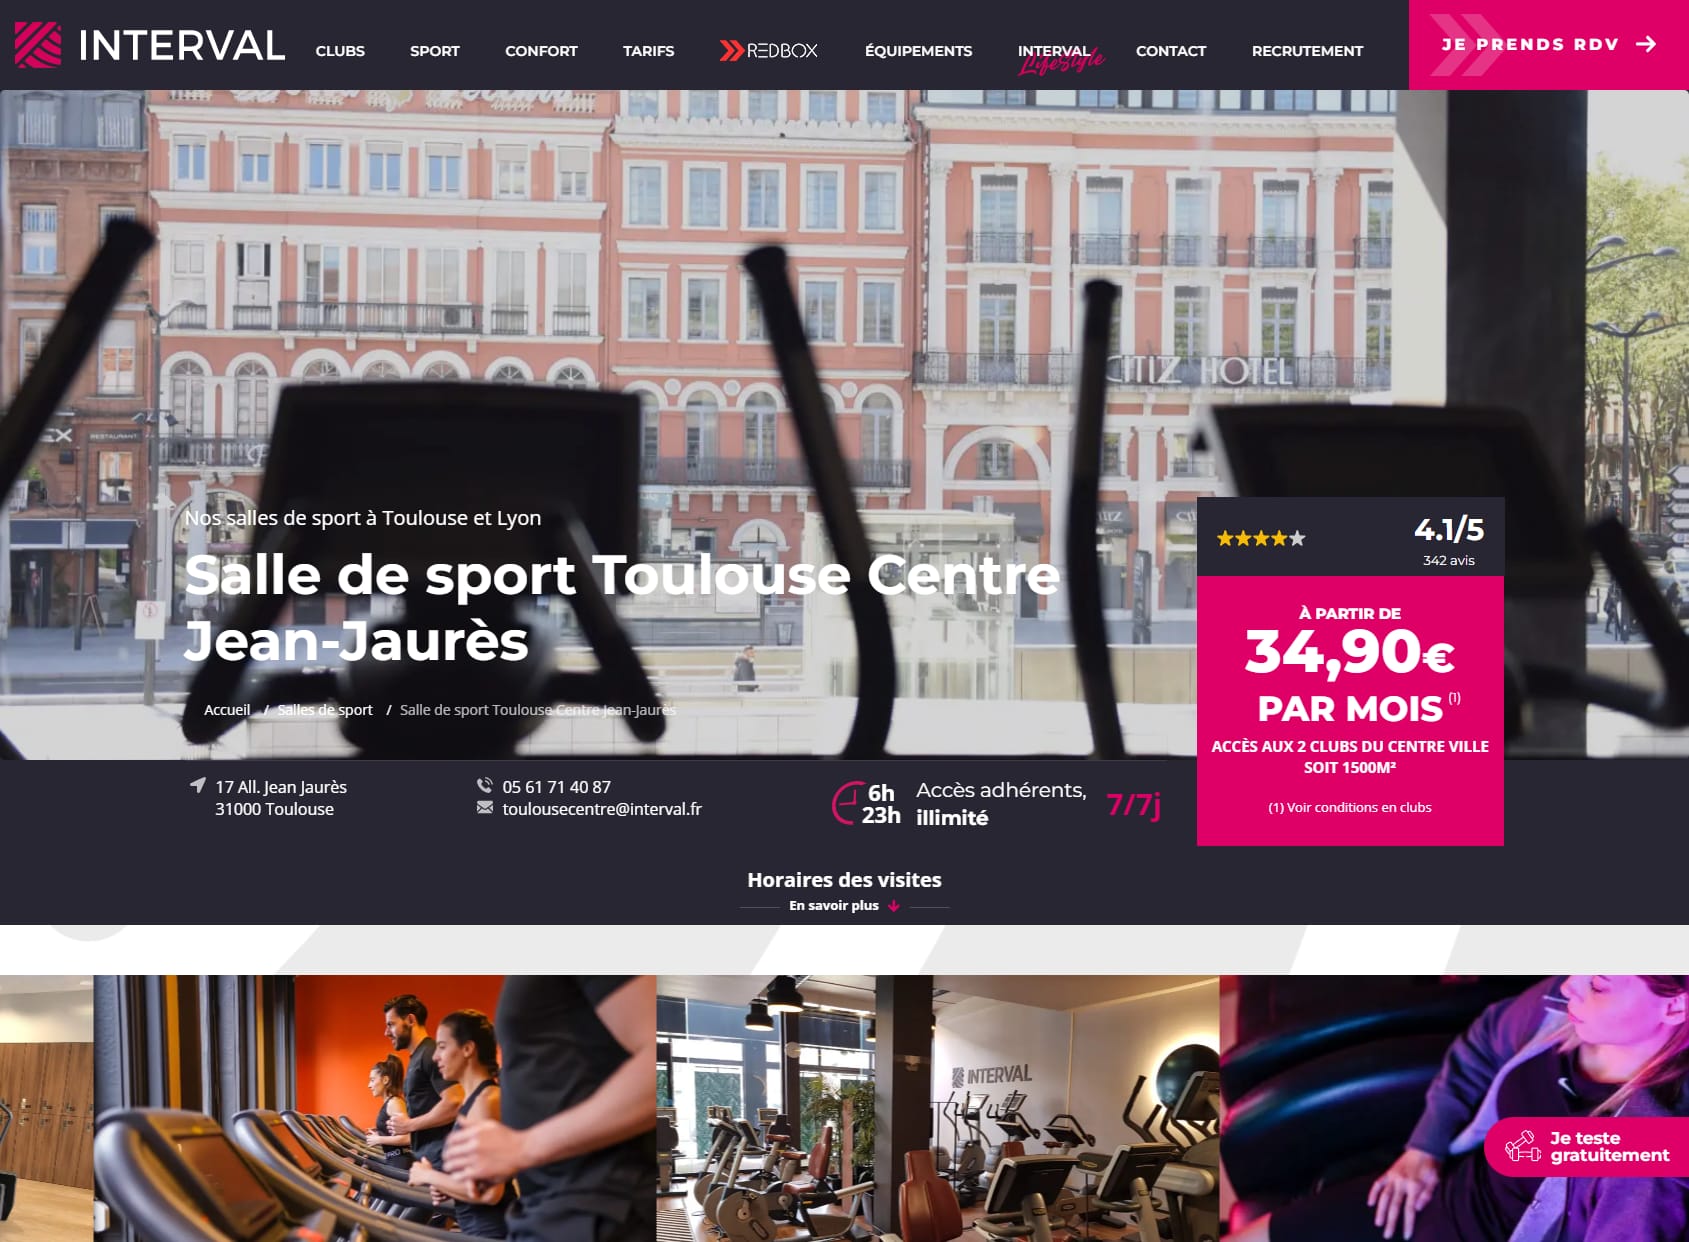 Interval, Salle de sport Toulouse Centre